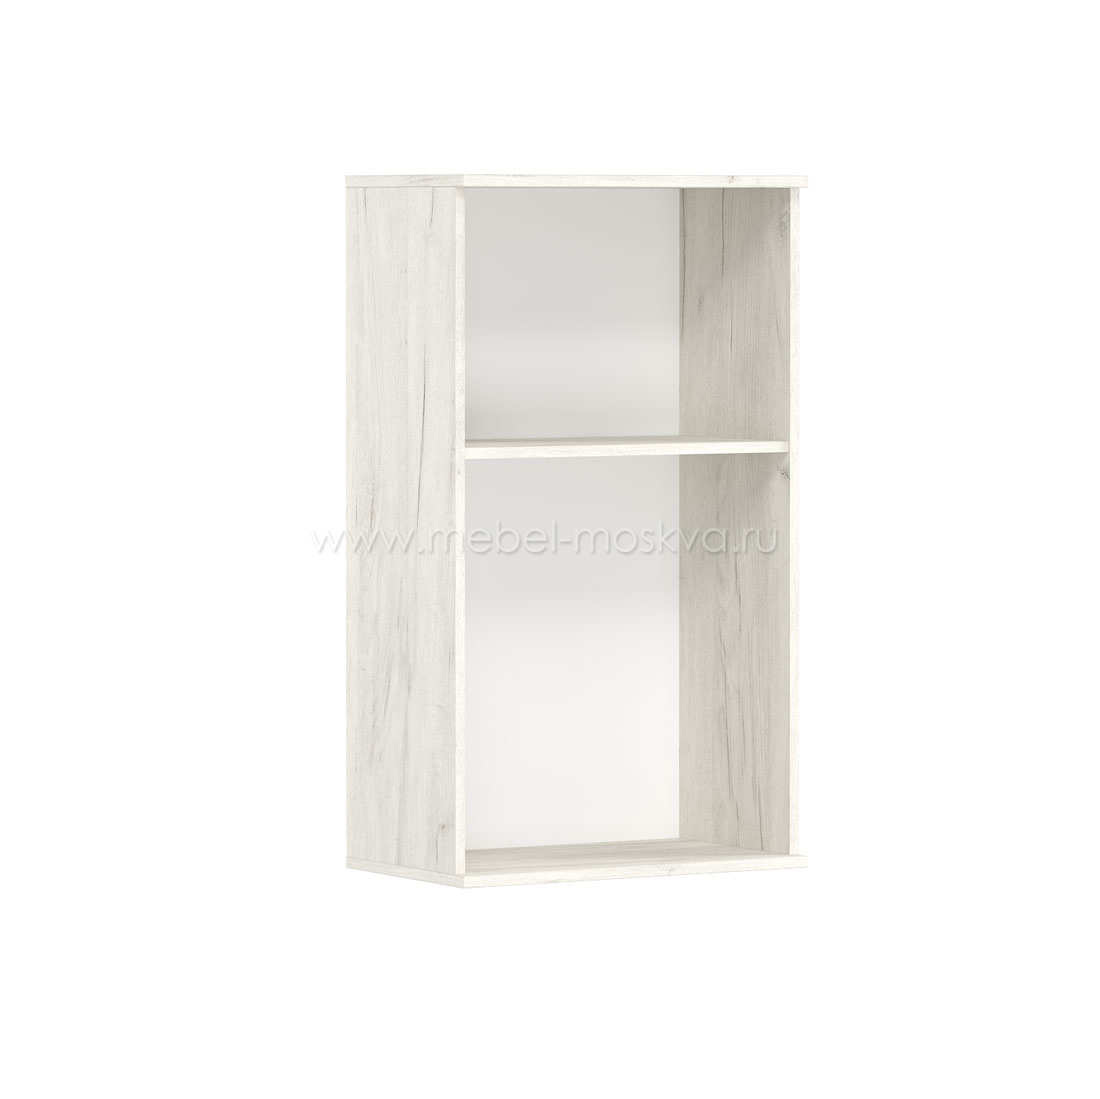 Навесной шкаф-витрина Napoli (Крафт белый/бетон Dark) правый